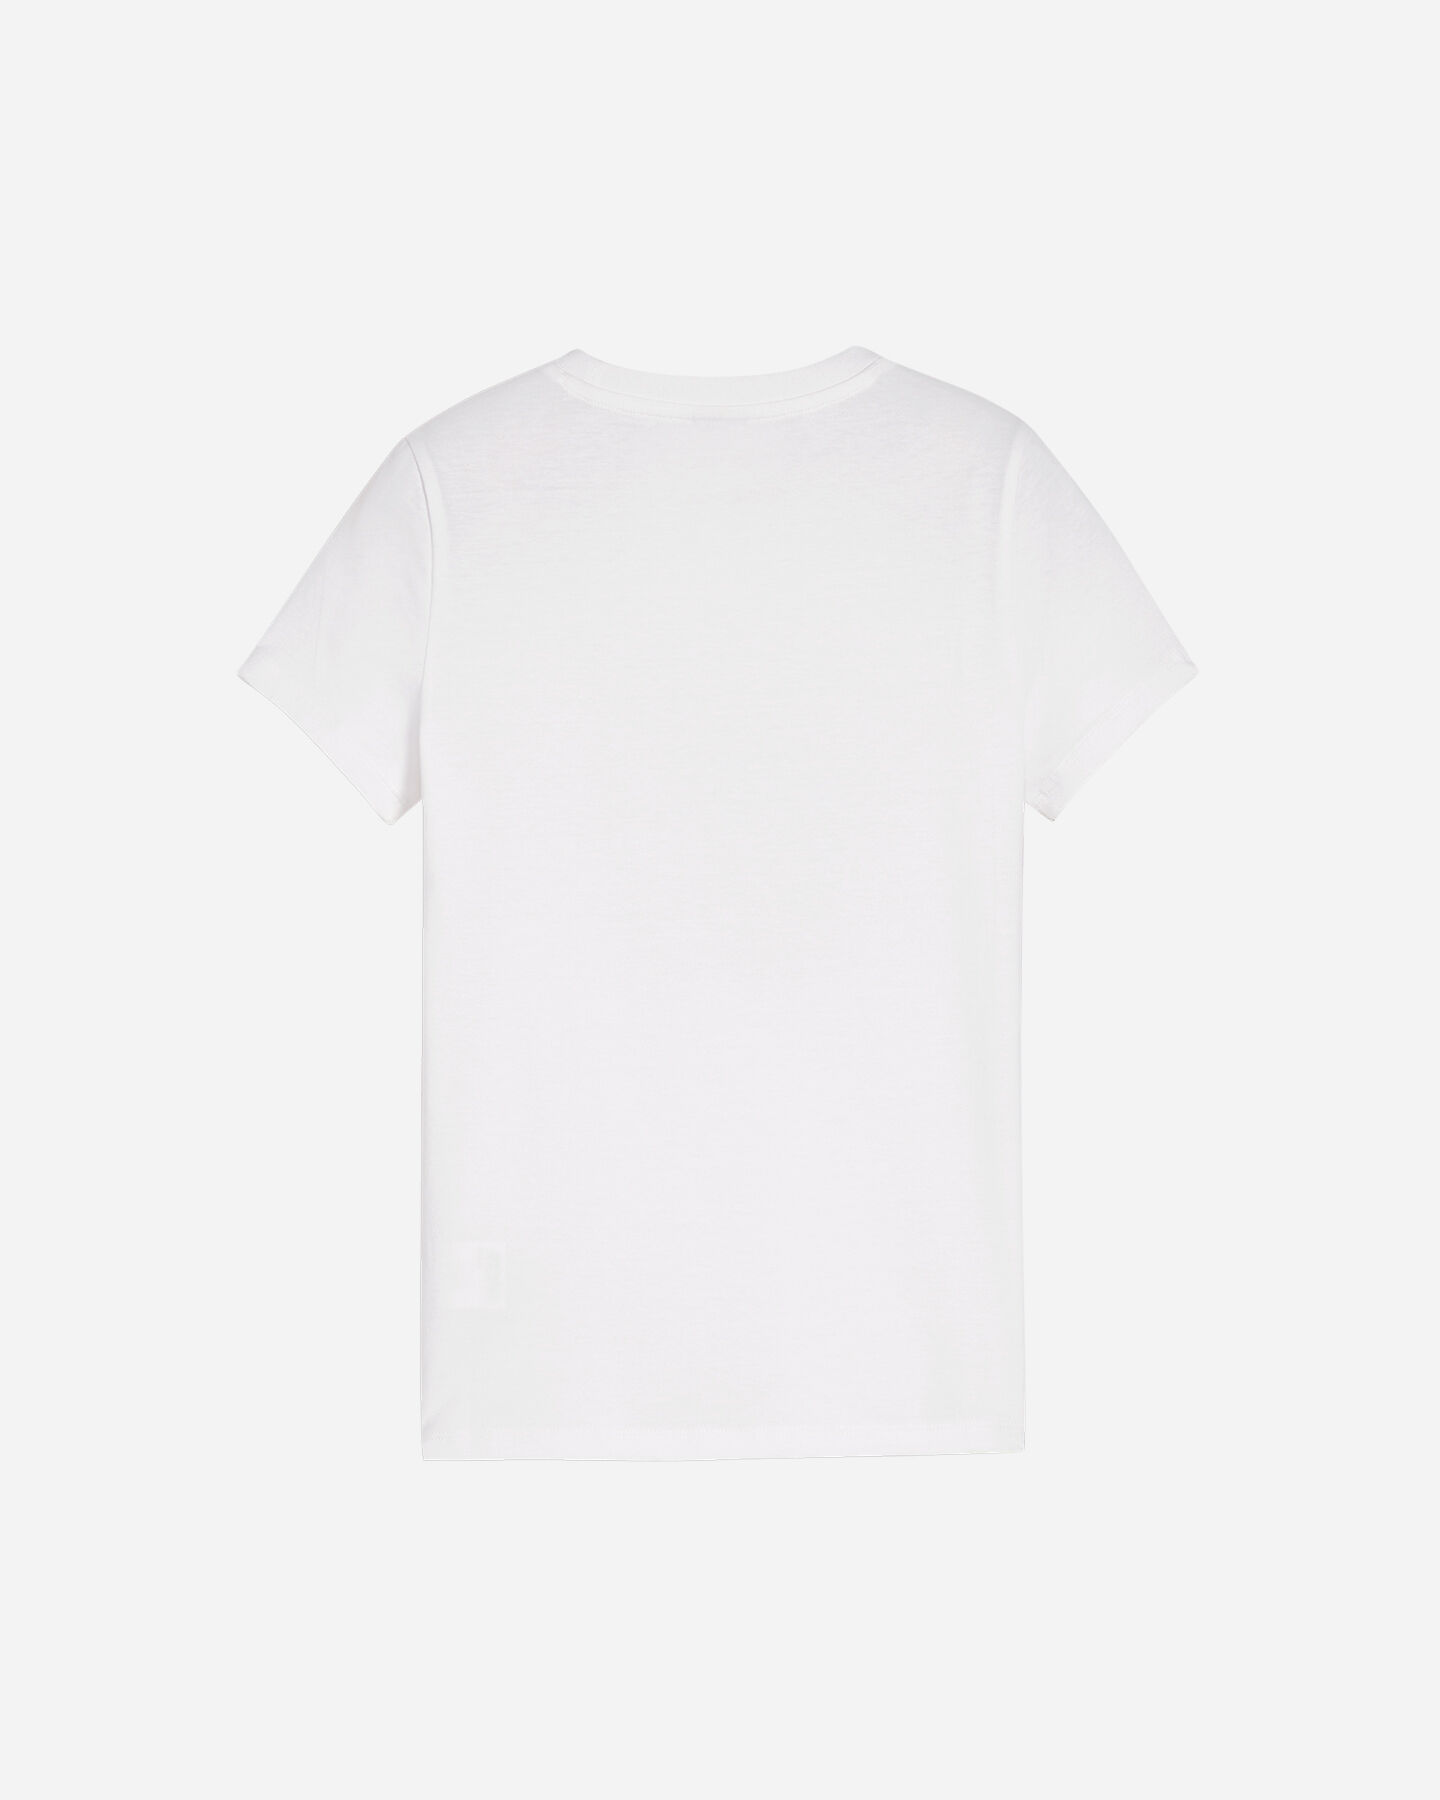  T-Shirt PUMA GIRL GRAPHIC JR S5662438|02|128 scatto 1